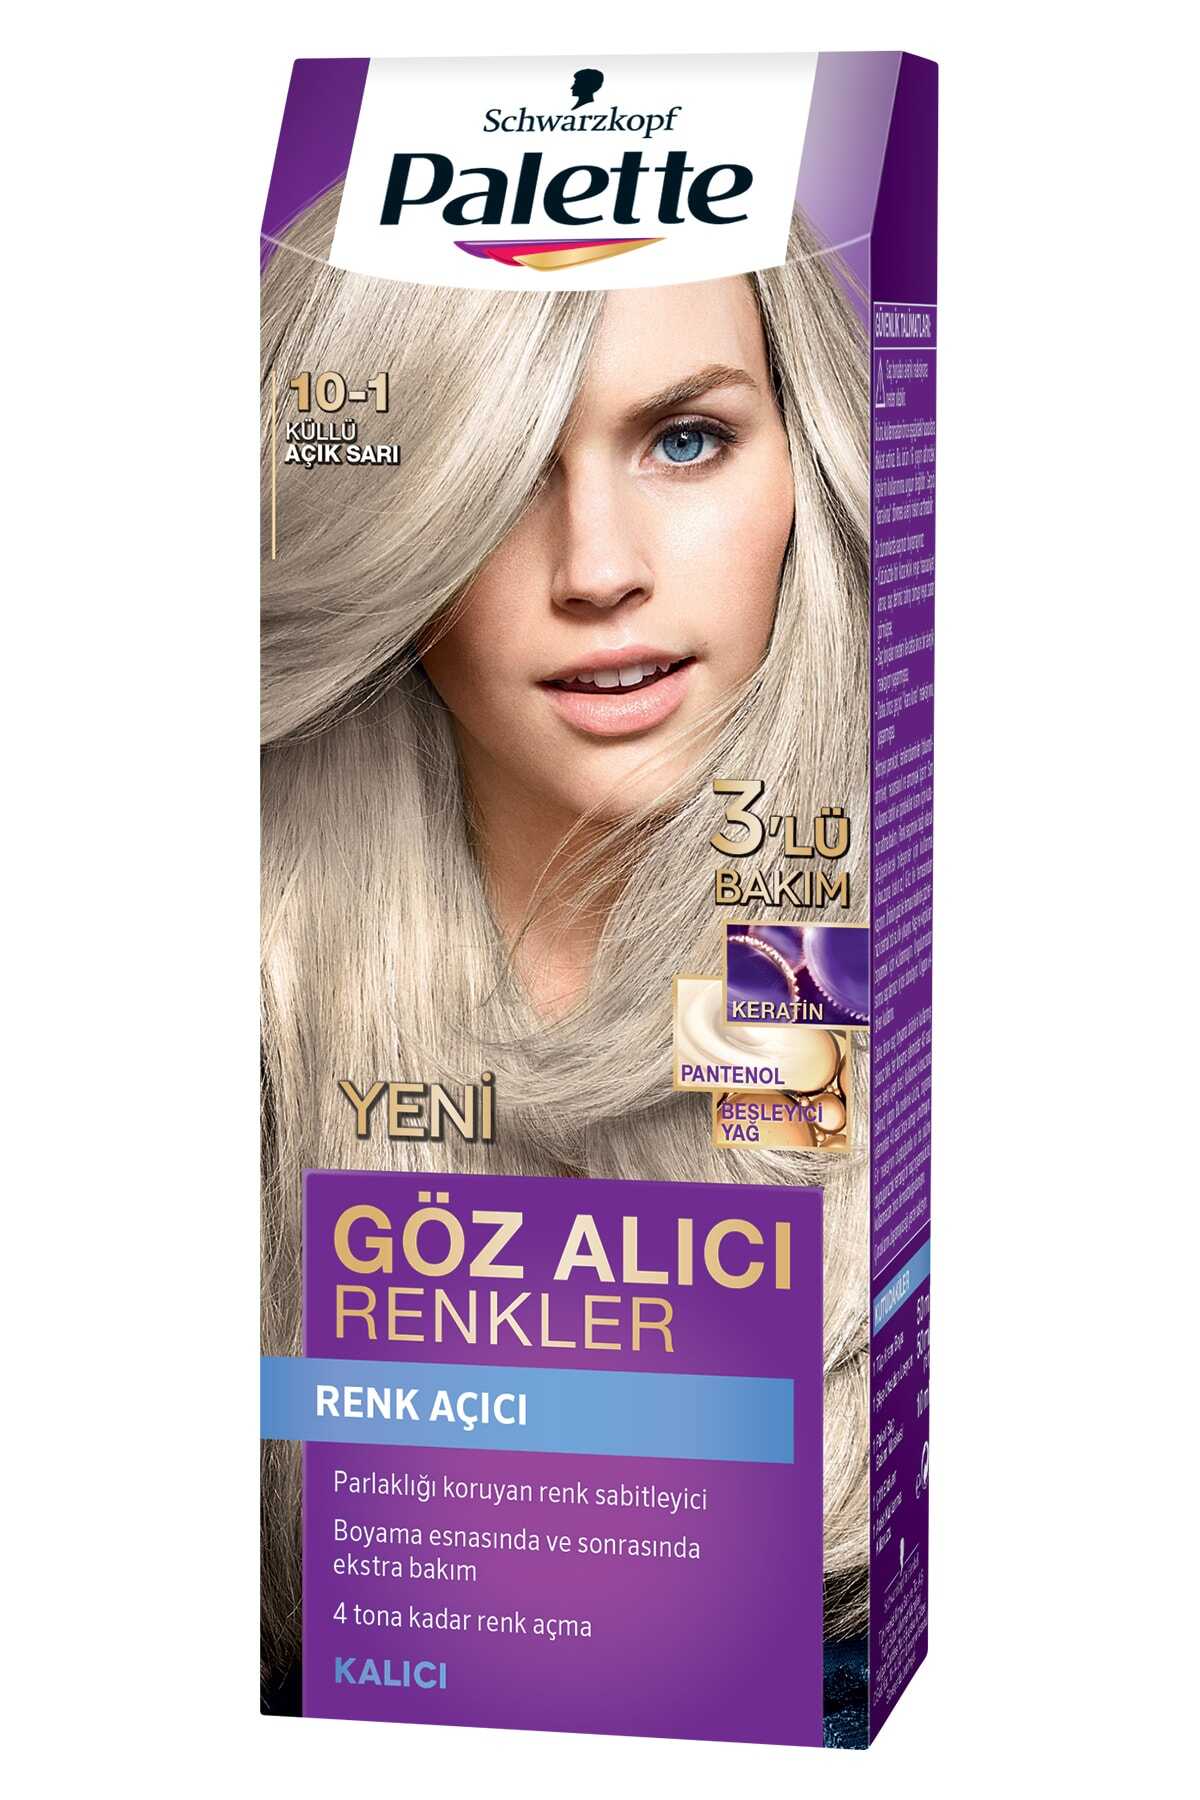 کیت رنگ مو کد 1-10 بلوند خاکستری روشن برند Palette 